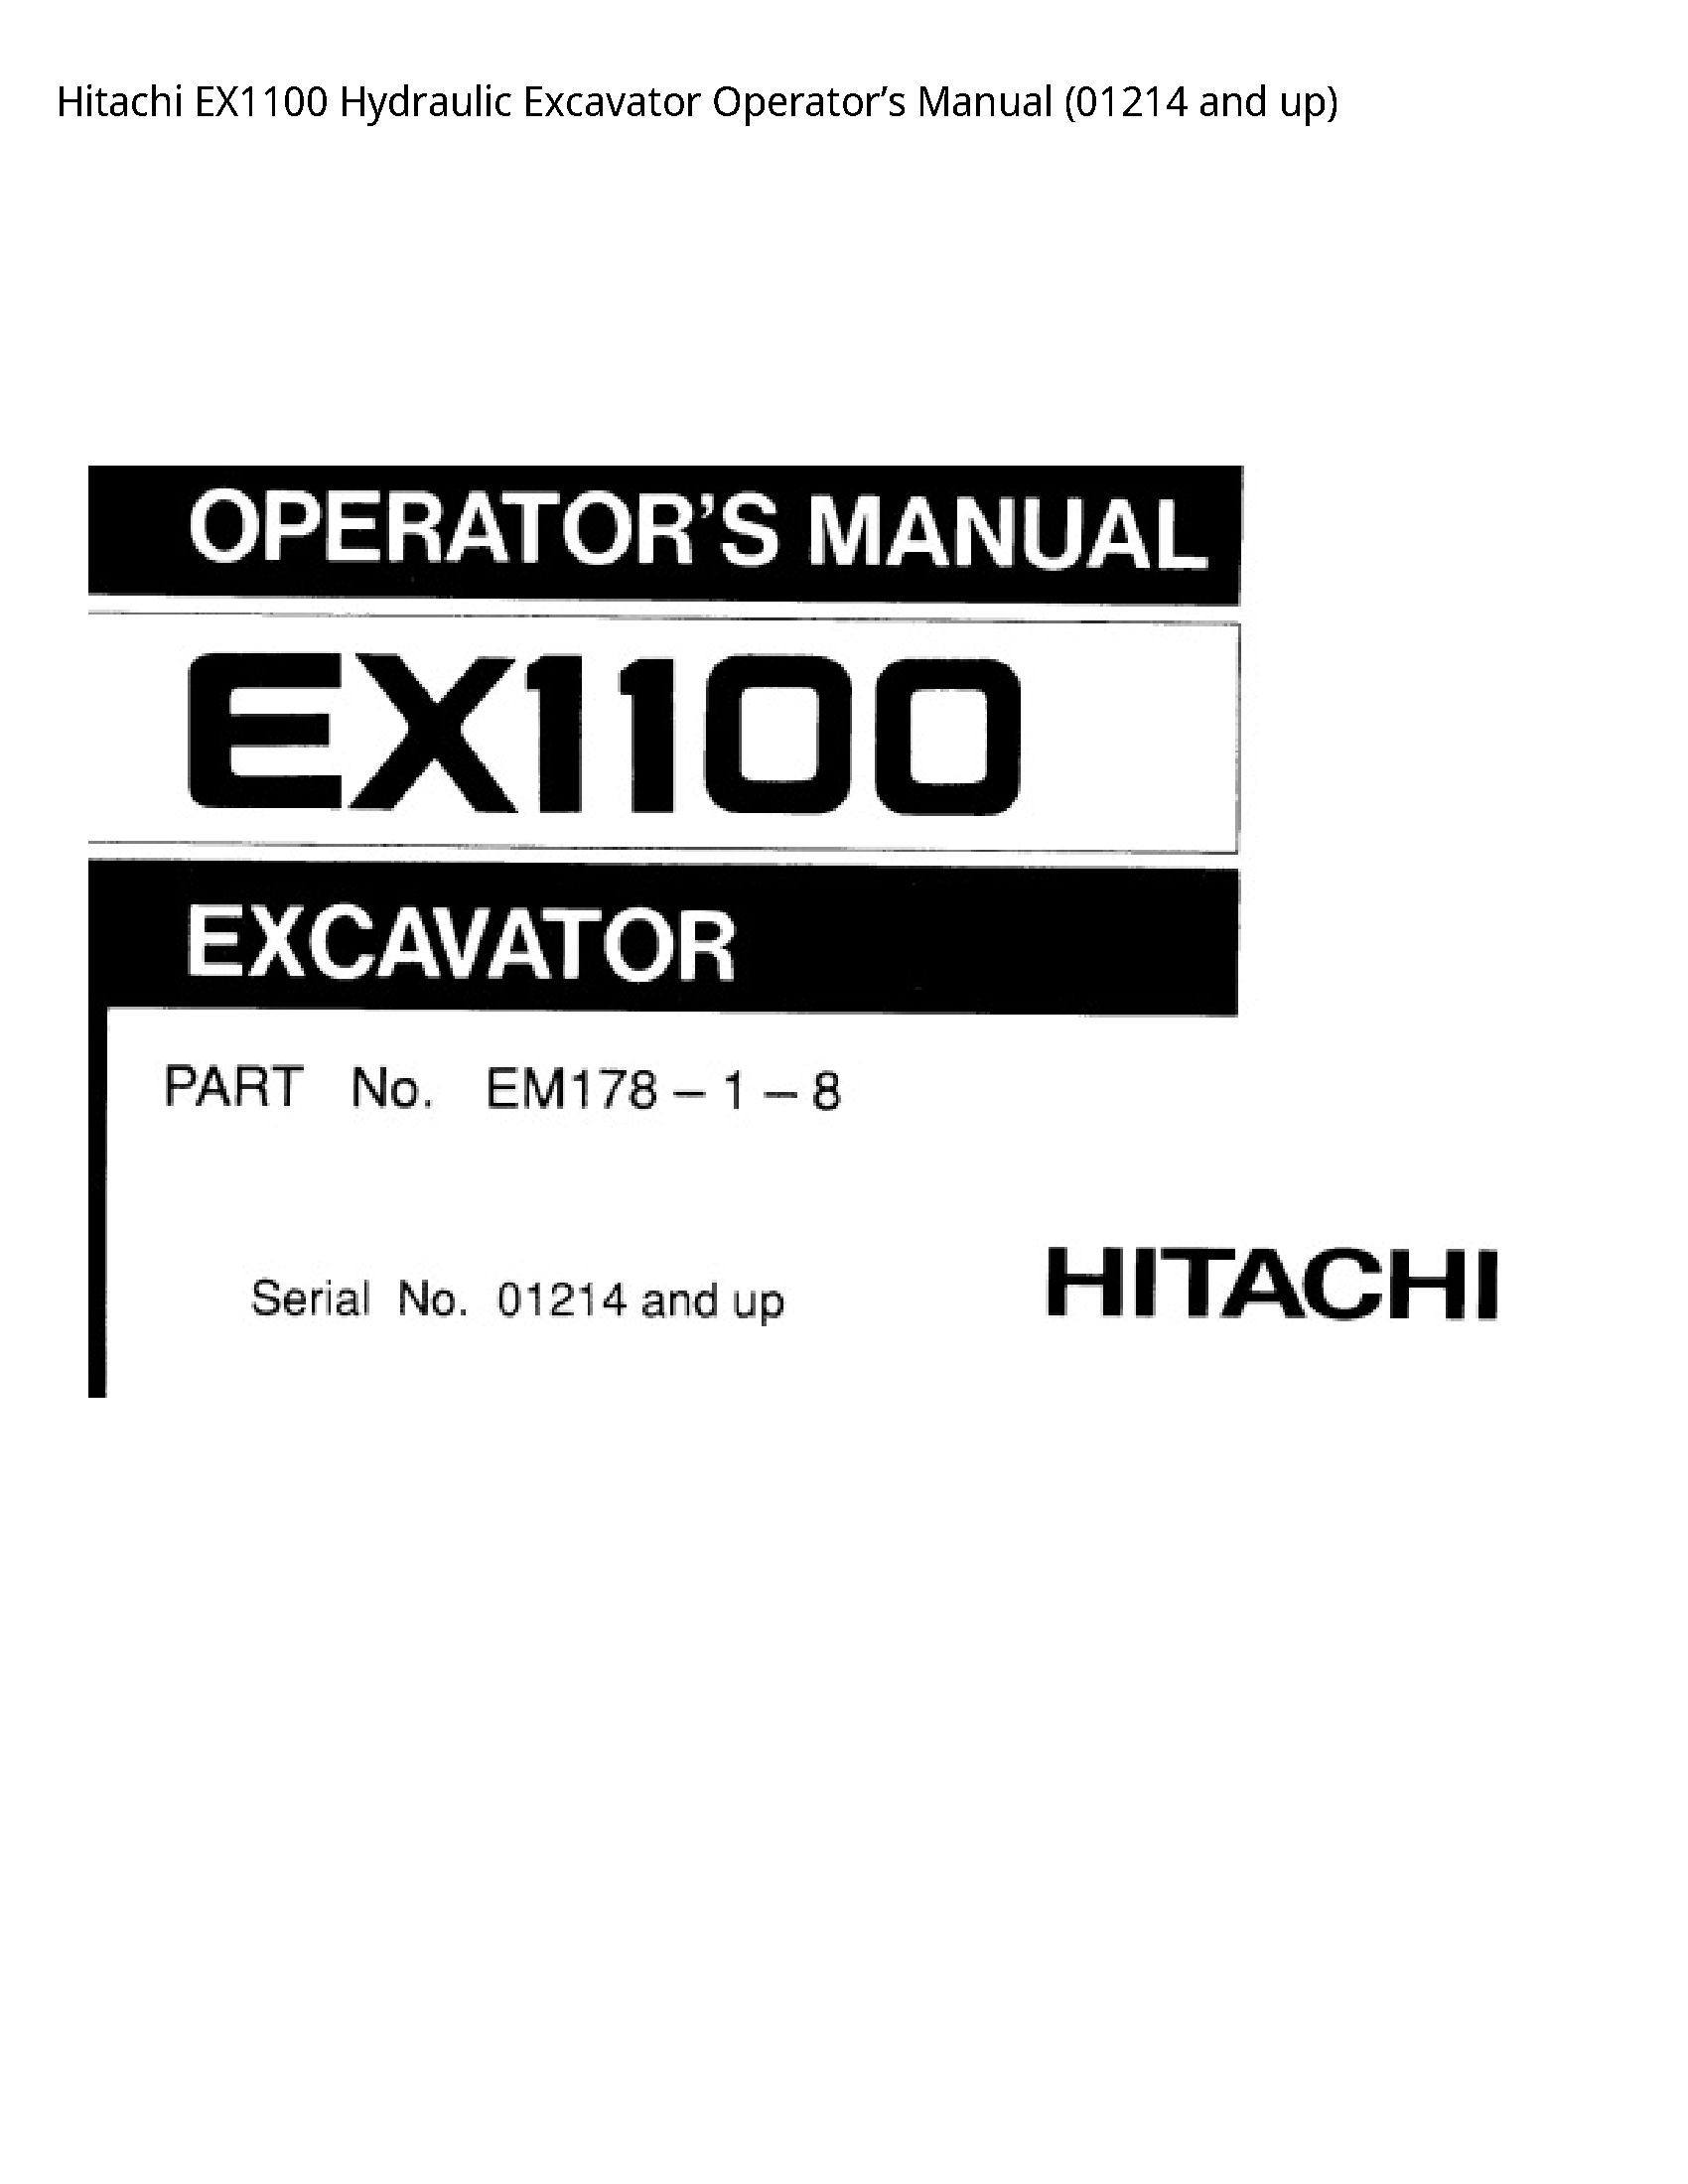 Hitachi EX1100 Hydraulic Excavator Operator’s manual